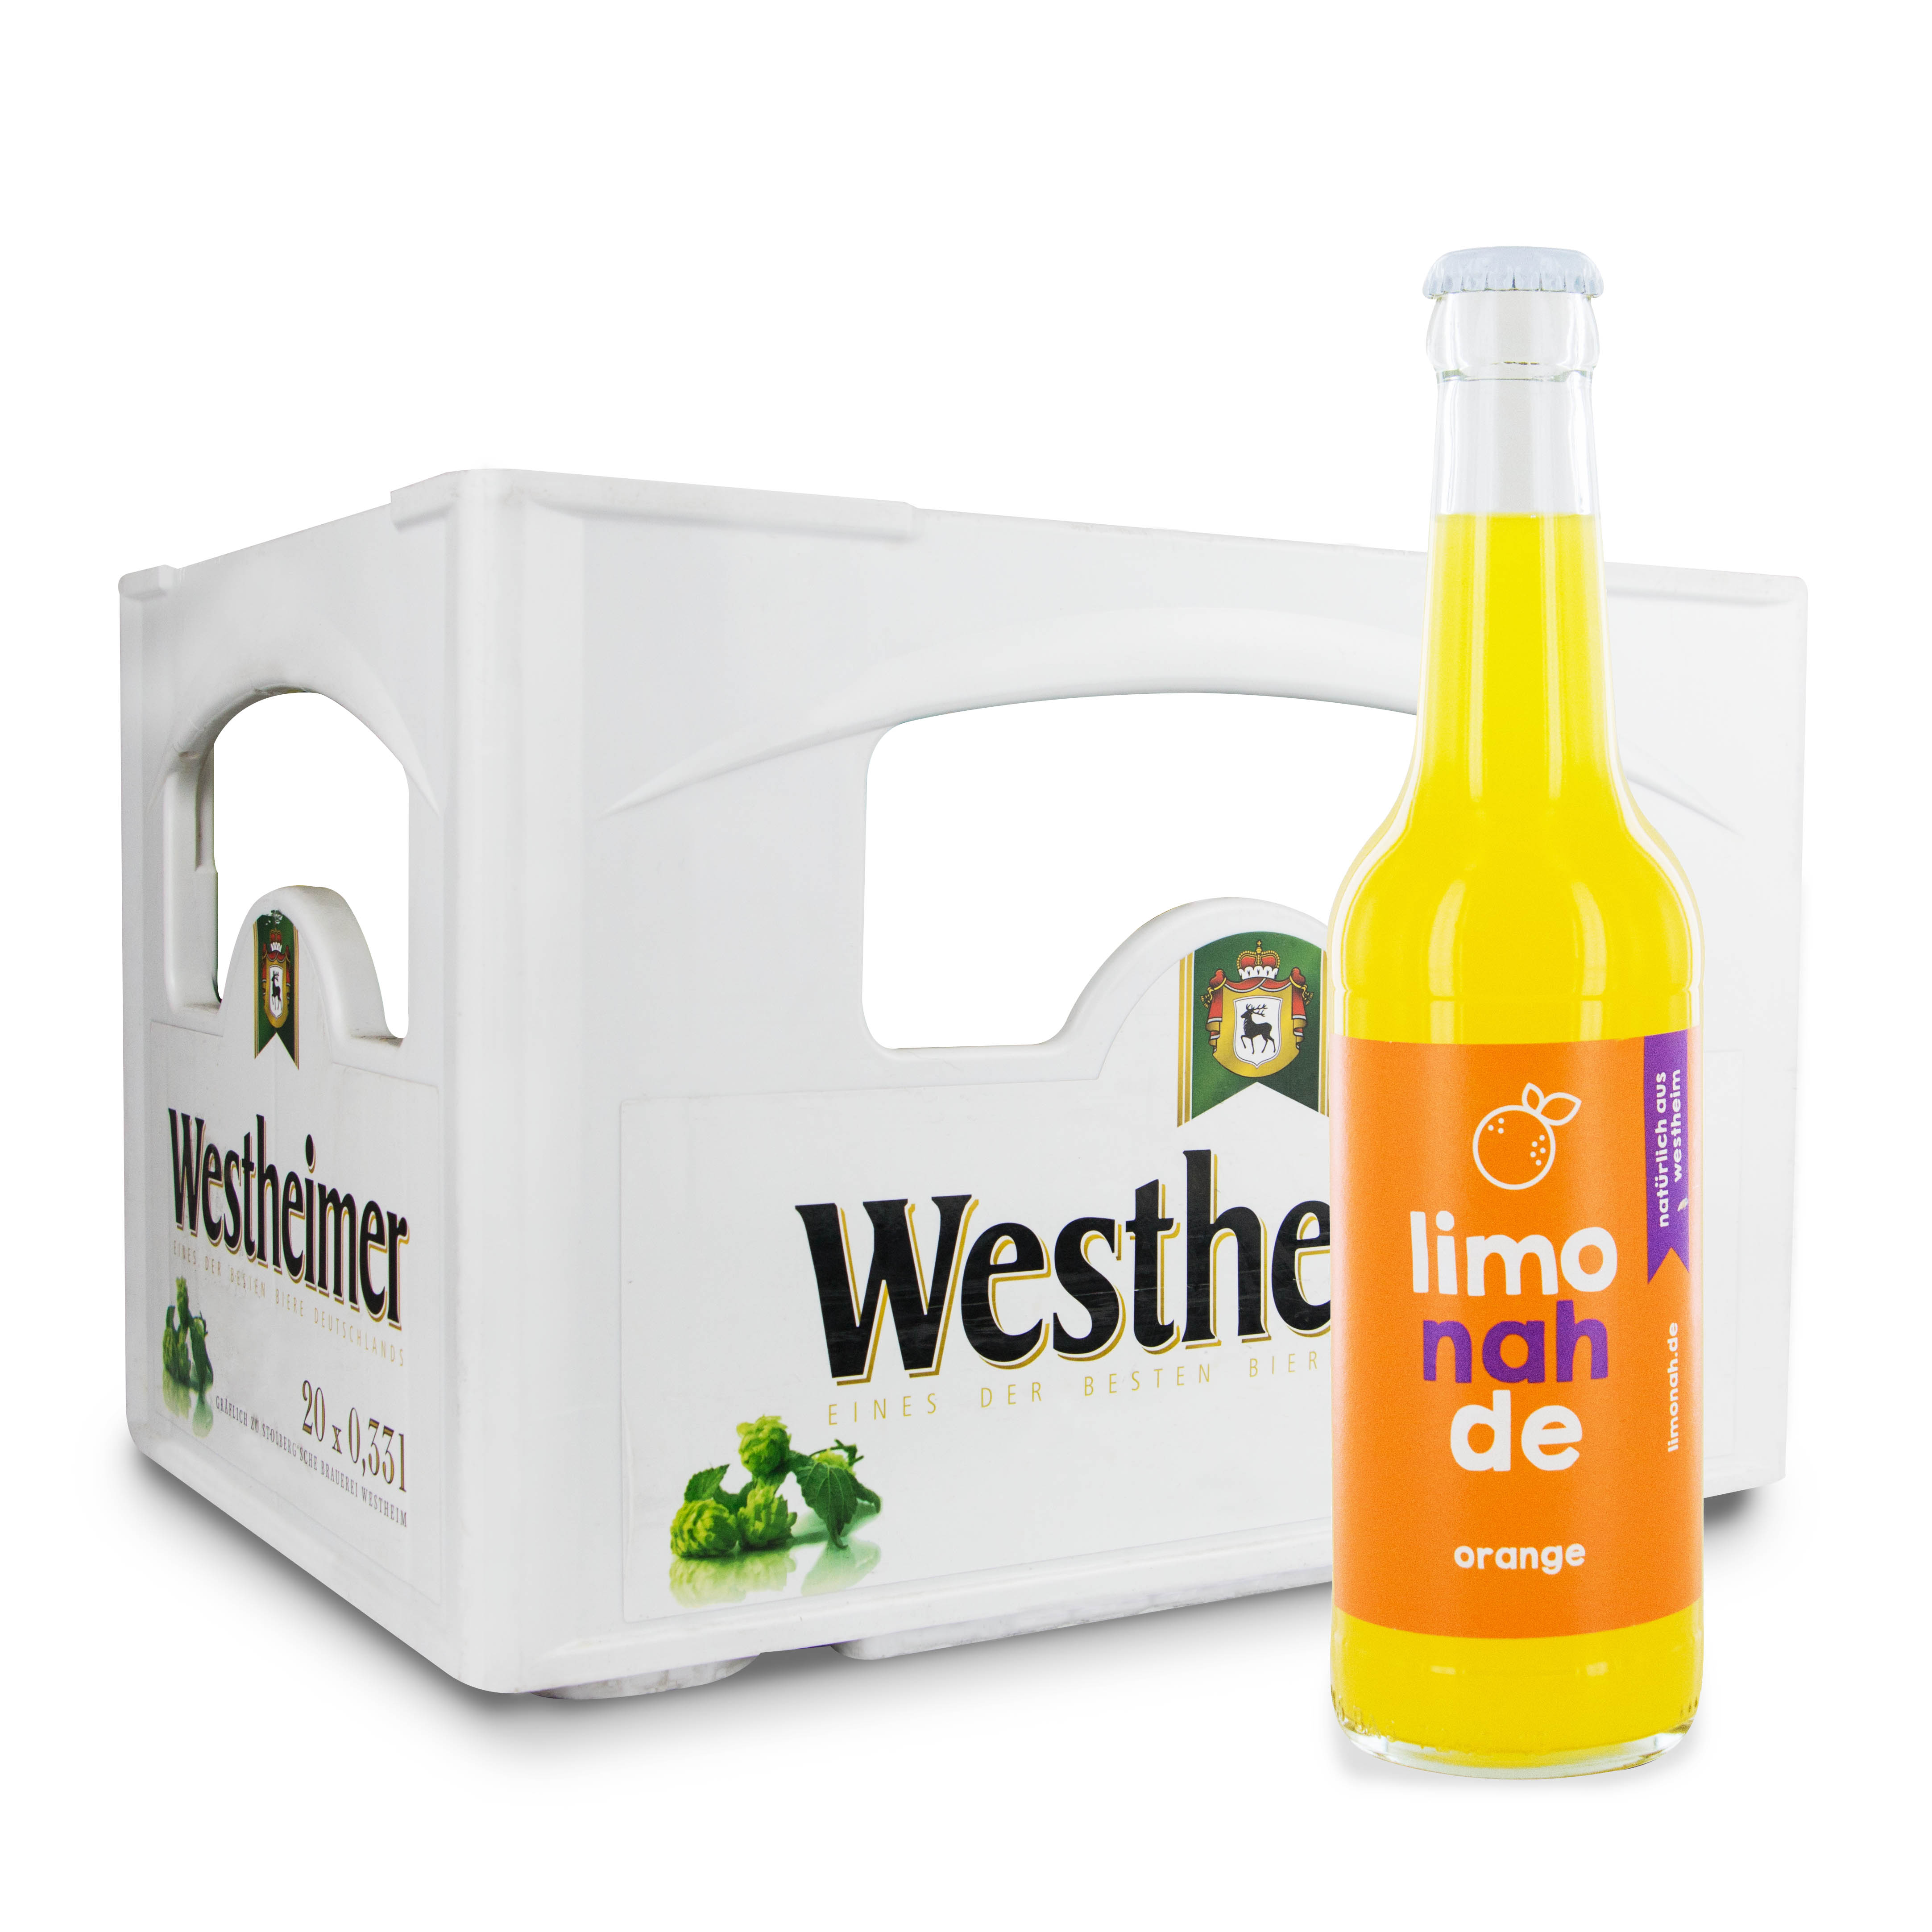 Westheimer limoNAHde Orange in der Kiste-zoom